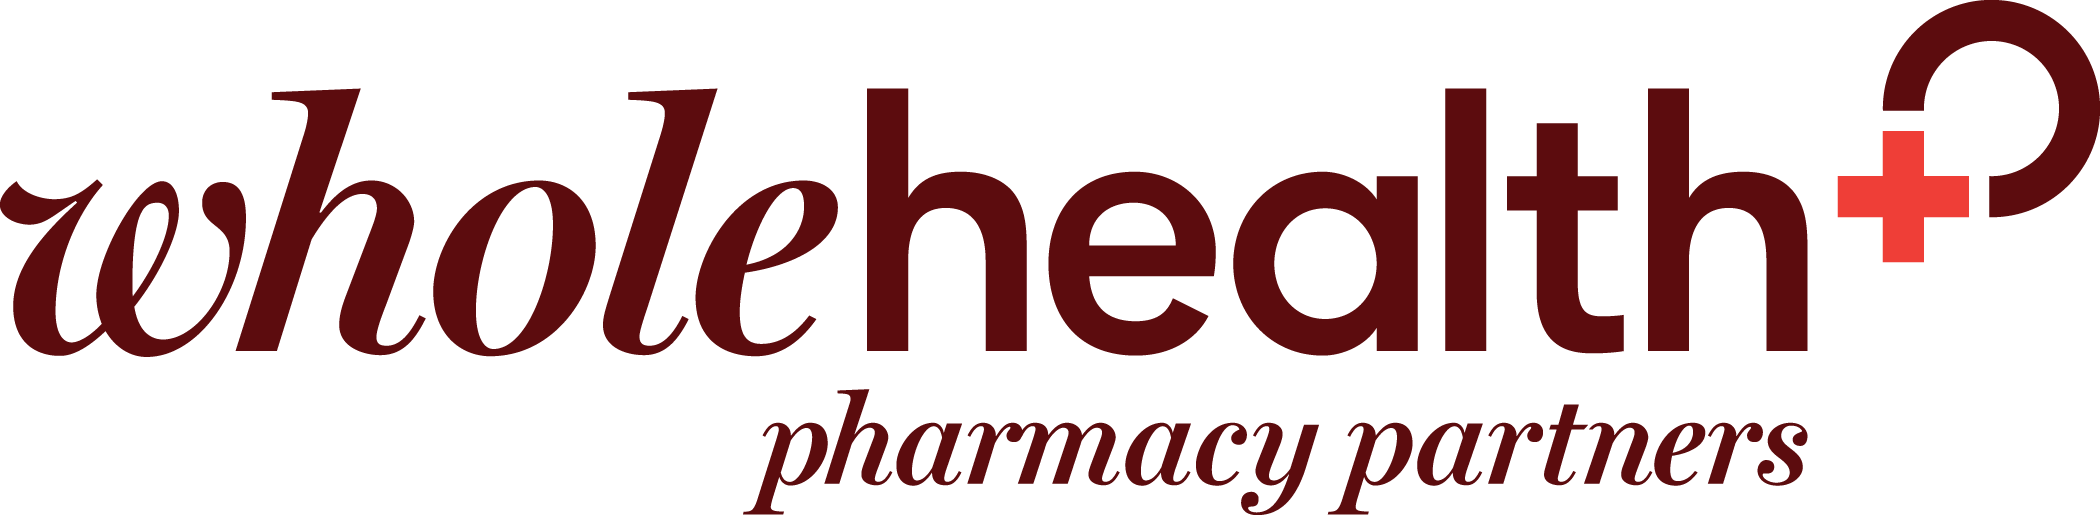 Whole health pharmacy partners logo